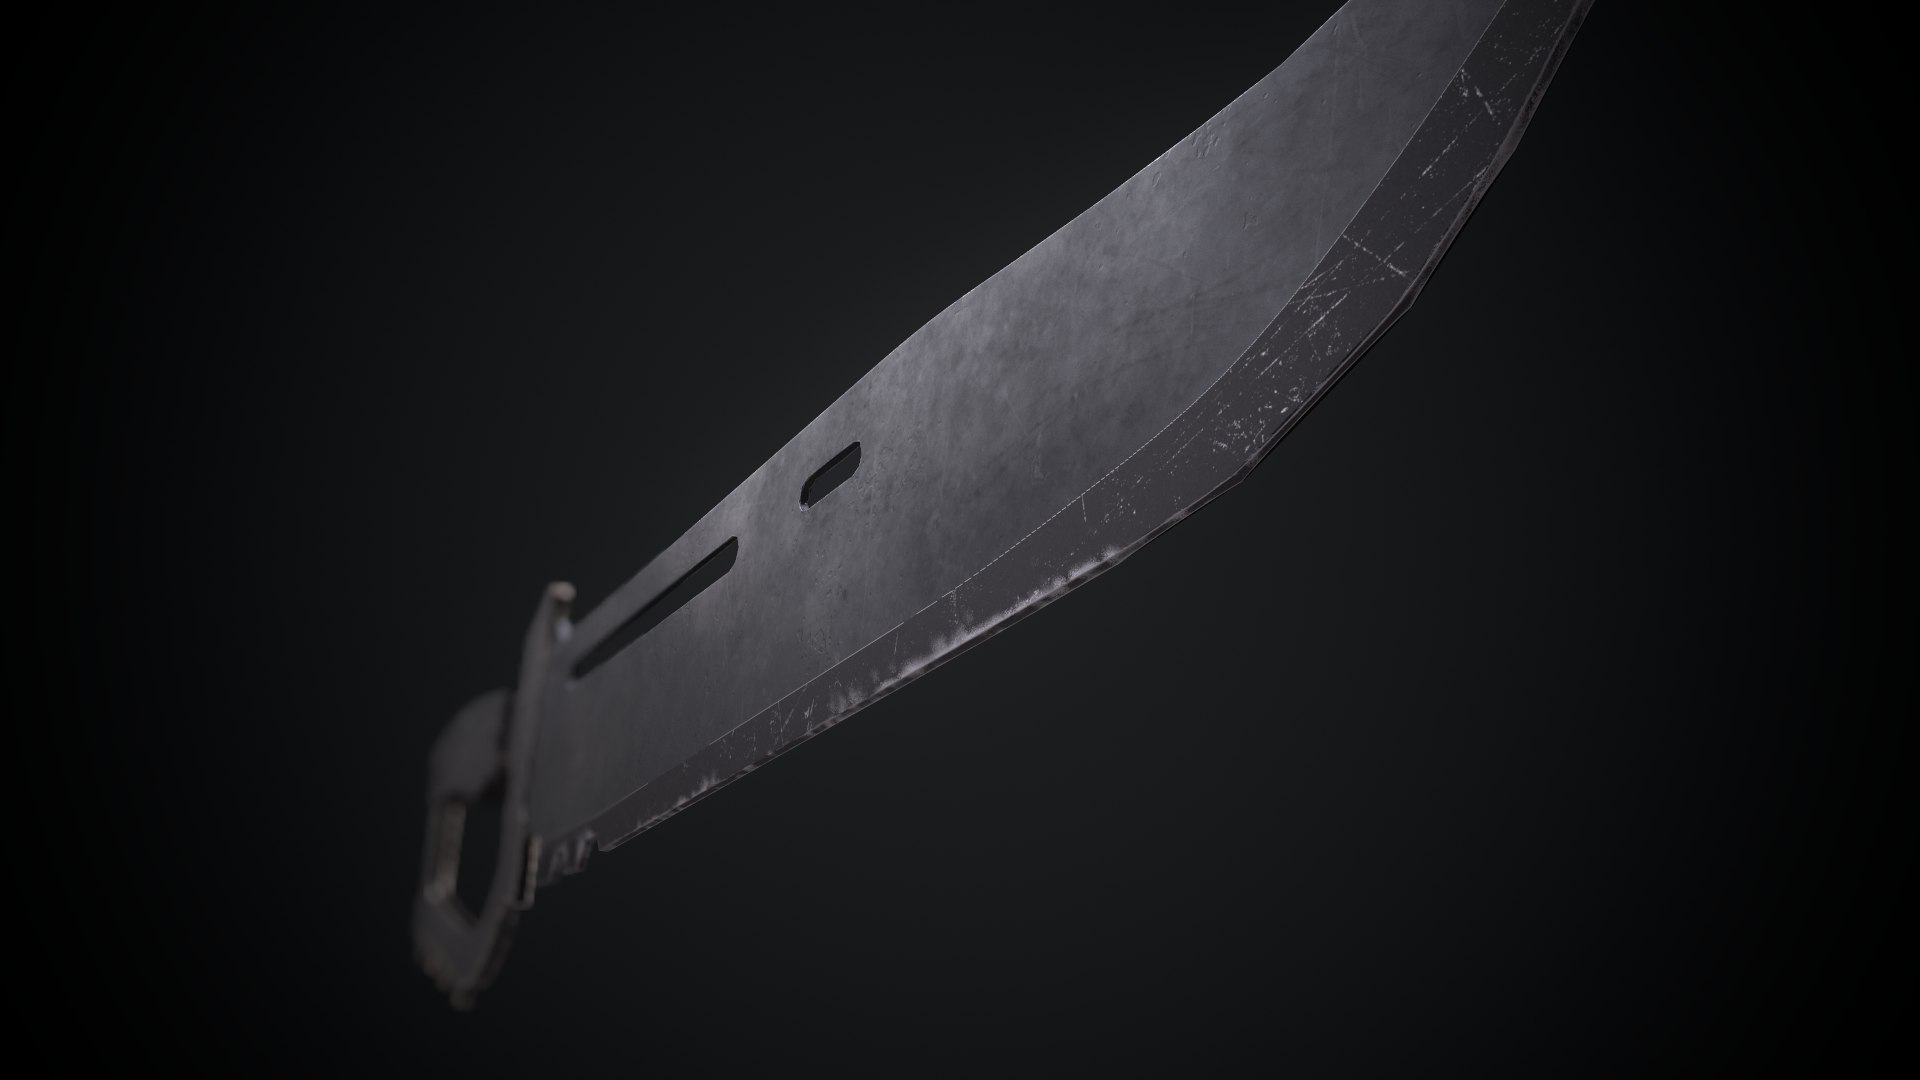 3D Bowie Knife Model - TurboSquid 1613223